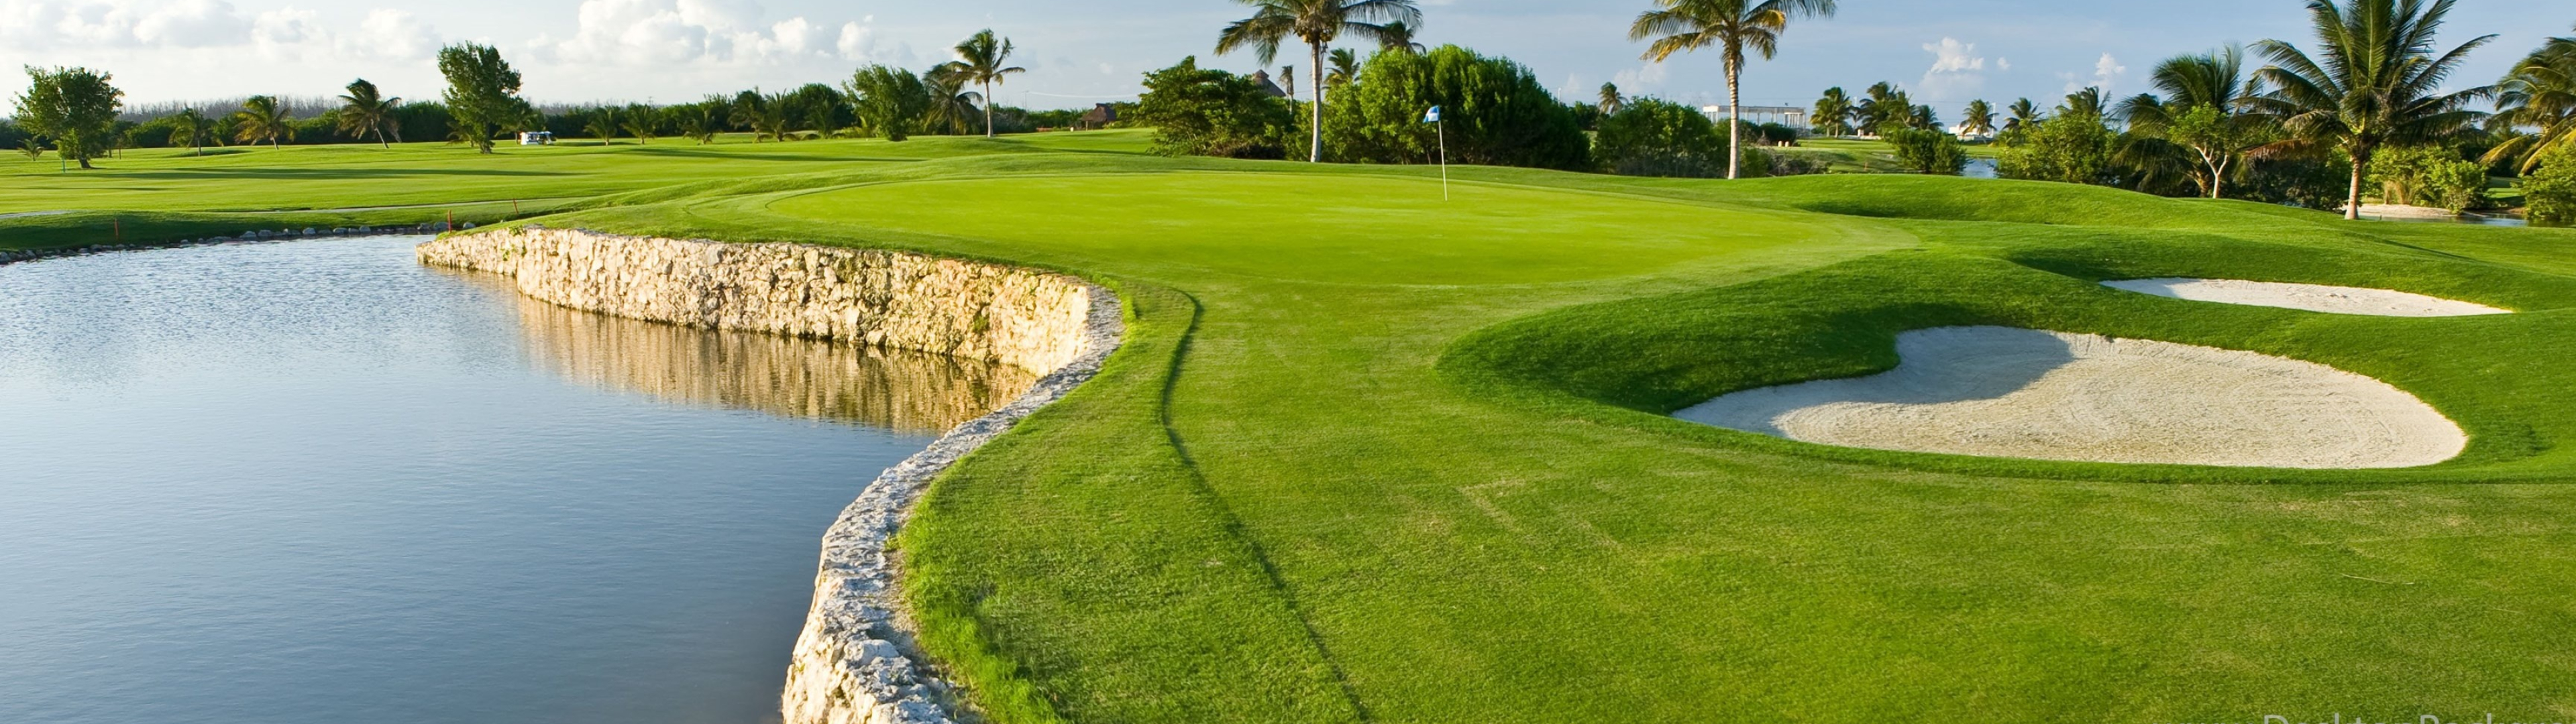 Golf Course: Iberostar Cancun, Mexico, Landscape design, Water hazard, Sand trap, Palm trees. 3840x1080 Dual Screen Wallpaper.